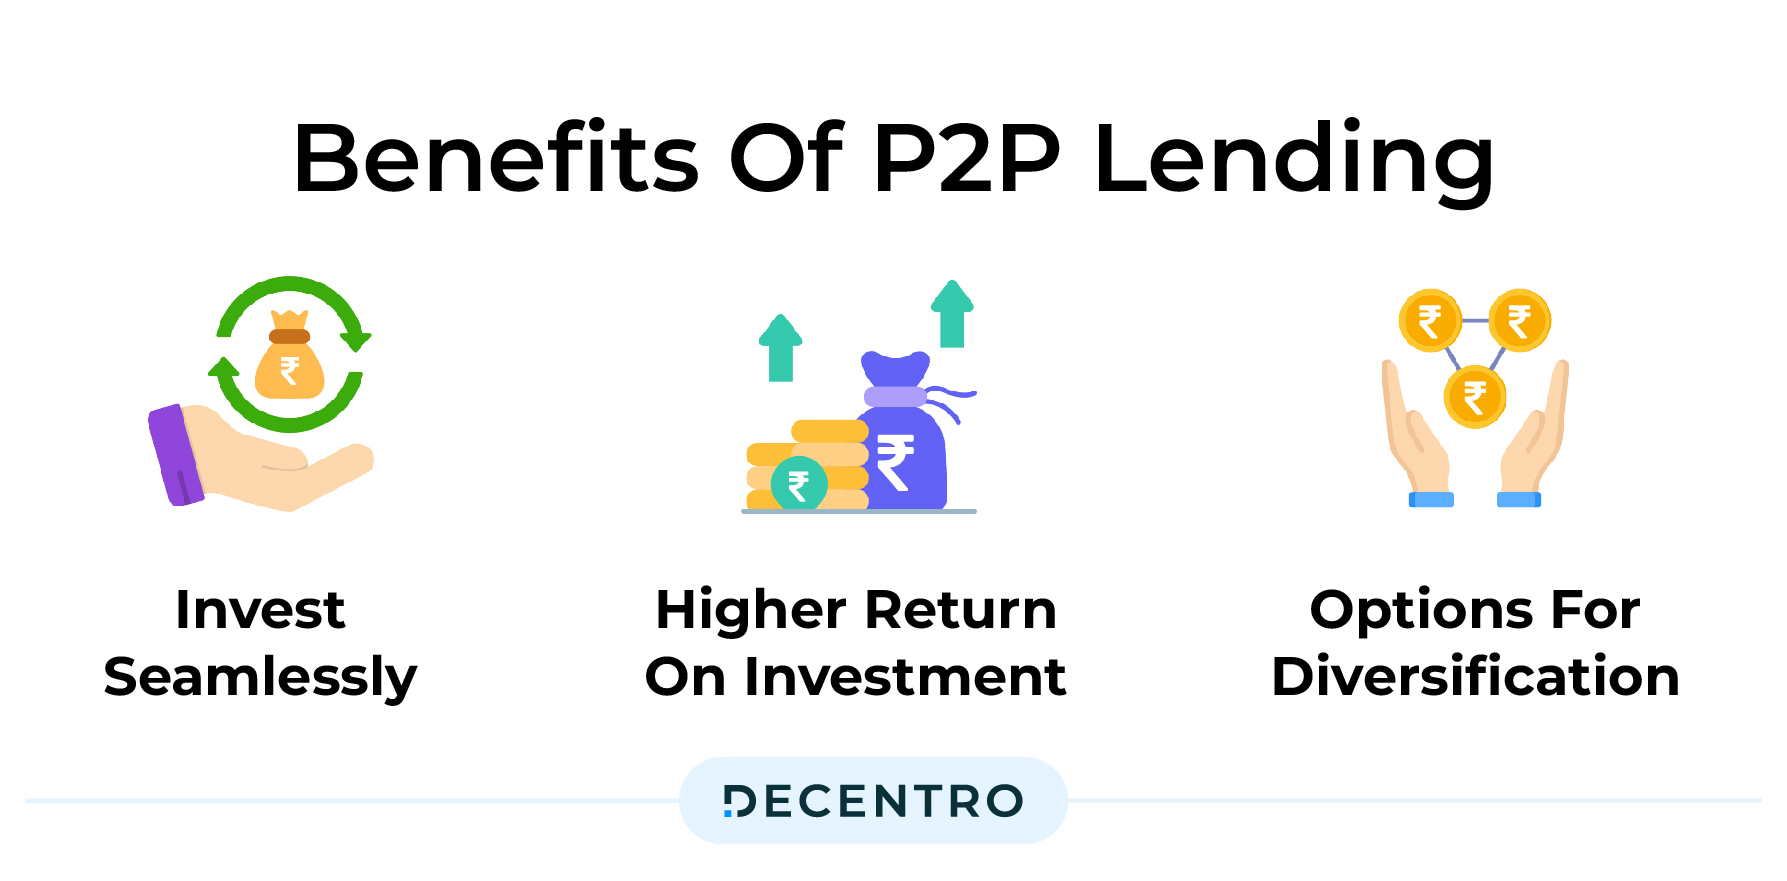 Benefits of P2P Lending